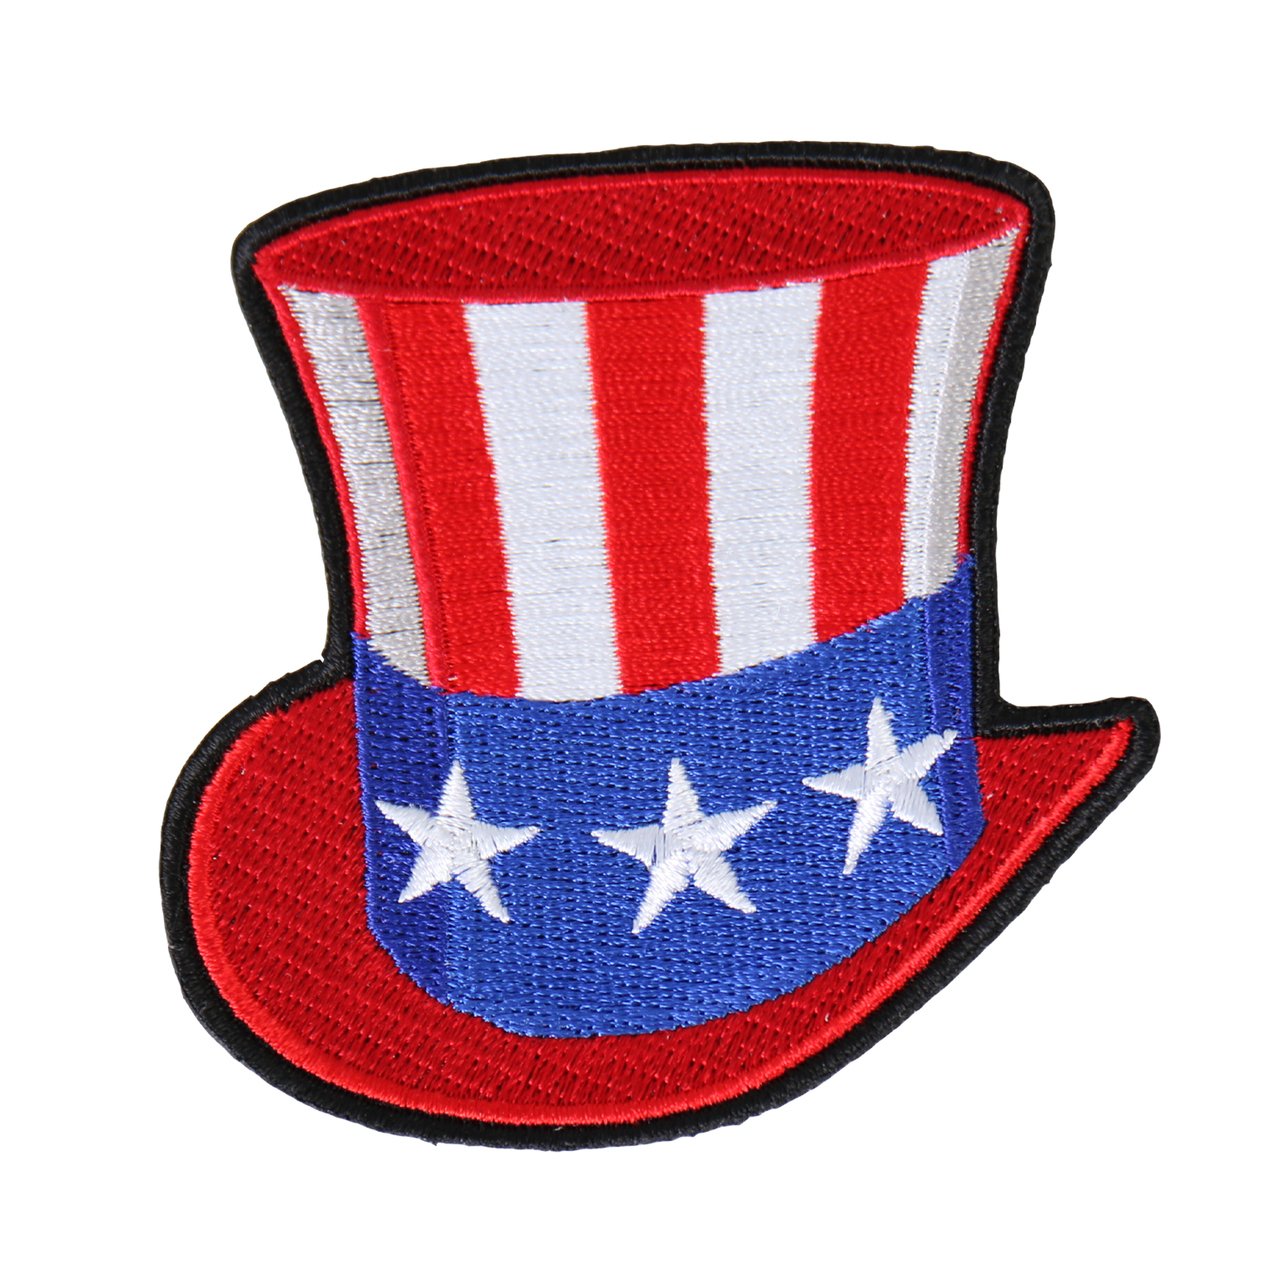 Uncle Sam Hat - American Flag Hat - Patch - SKU PAT-UNCLESAMHAT-HI